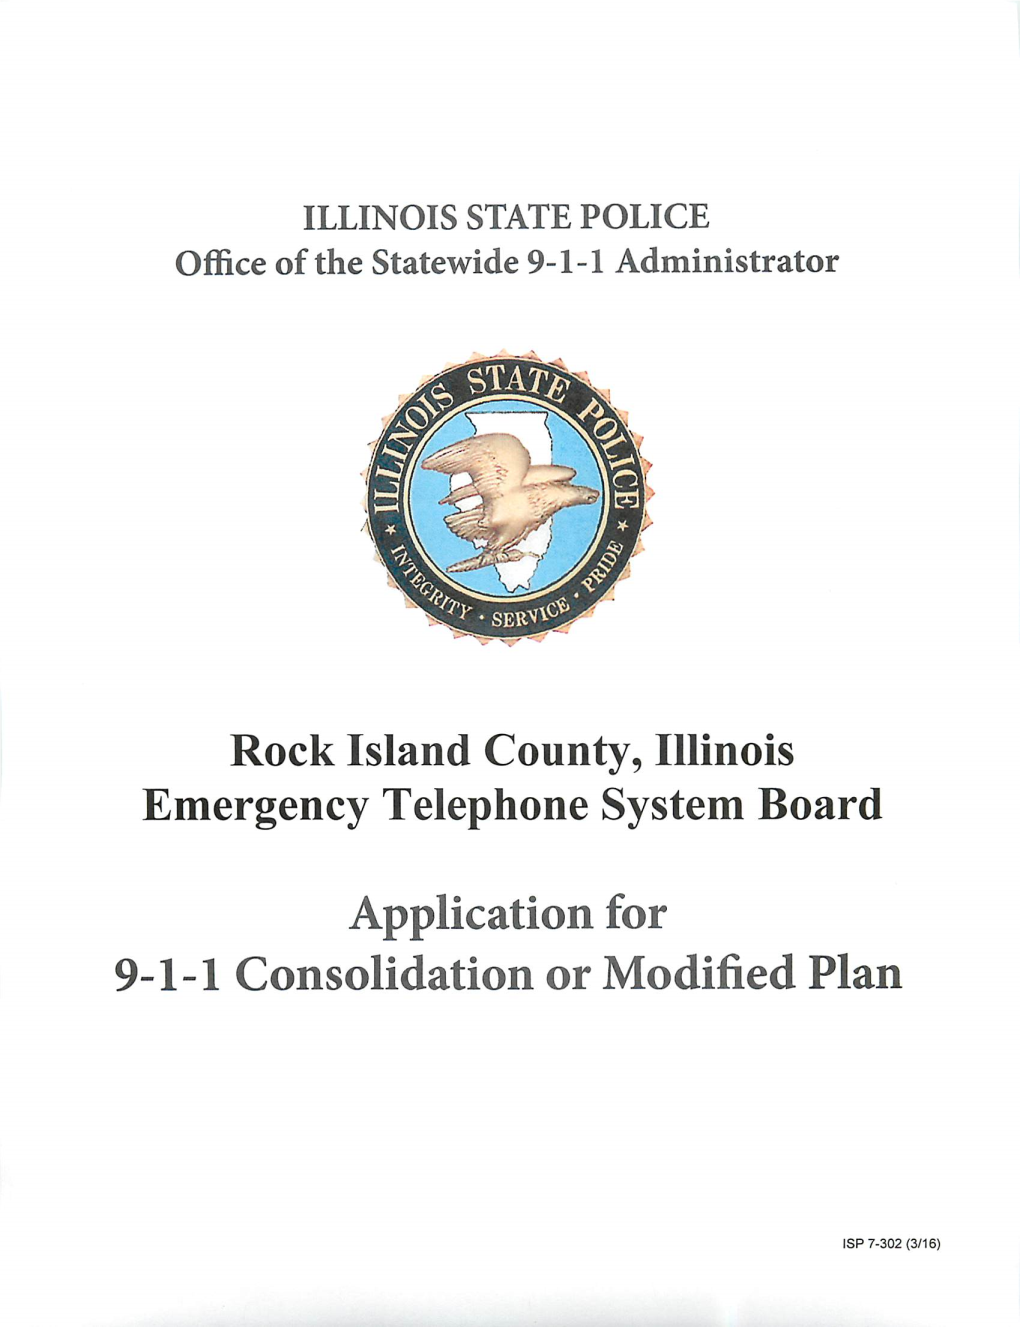 Rock Island County, Illinois Emergency Telephone System Board